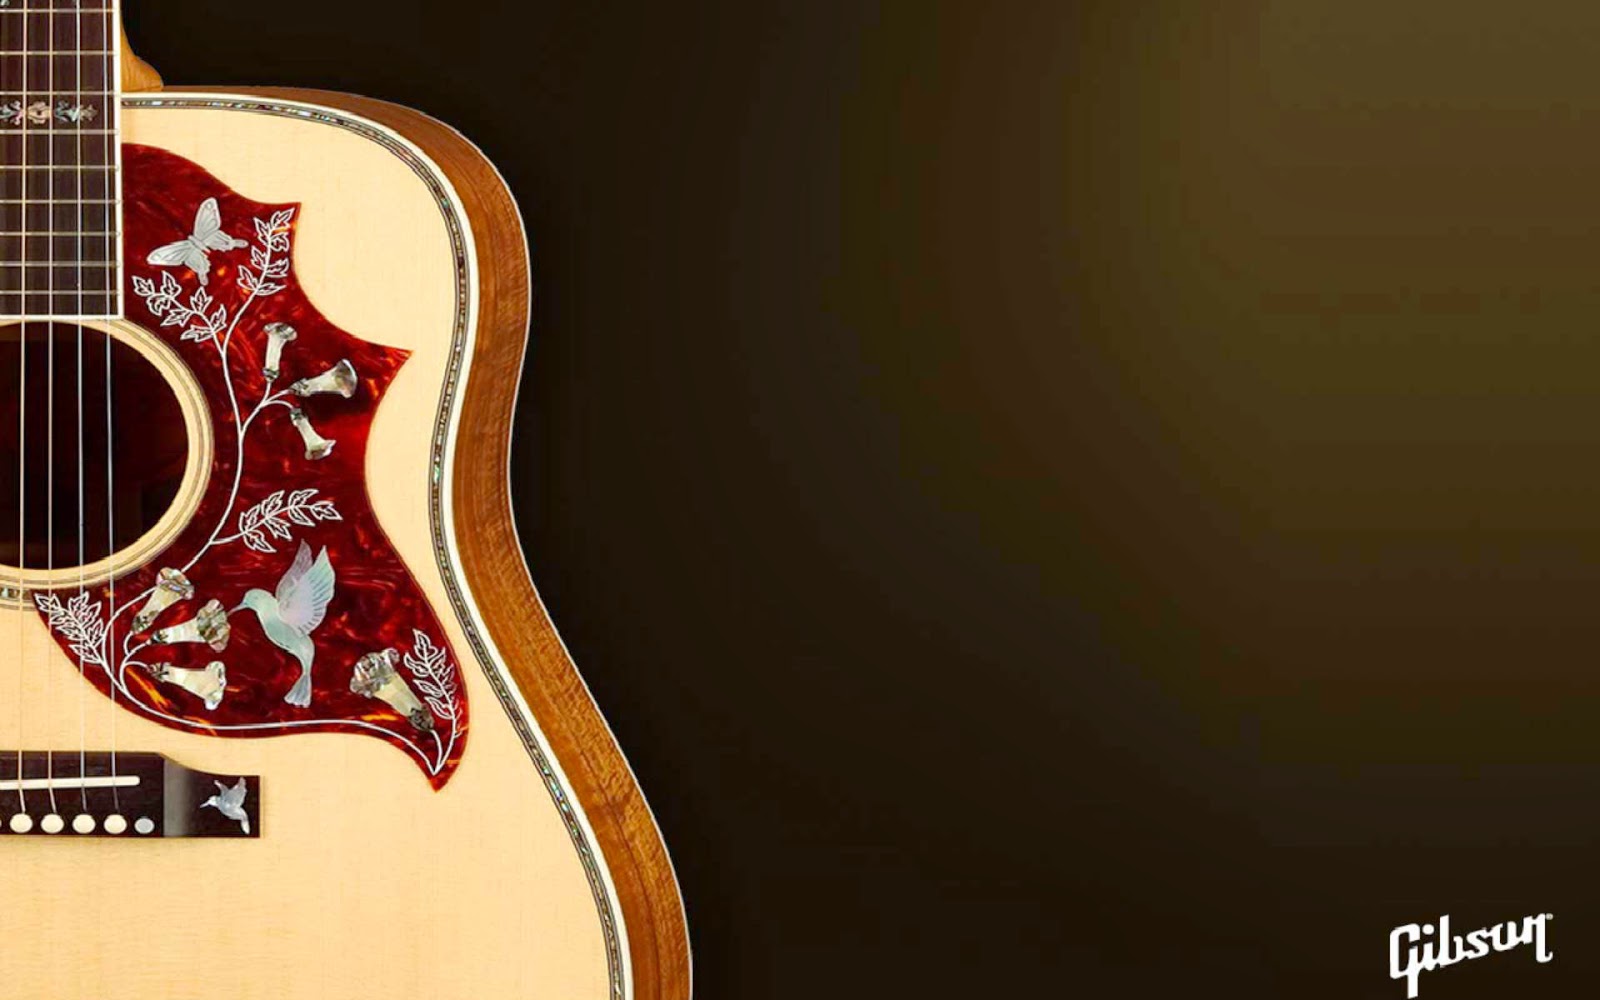 Gibson Acoustic Guitar Wallpaper HD Wall C7 Jpg